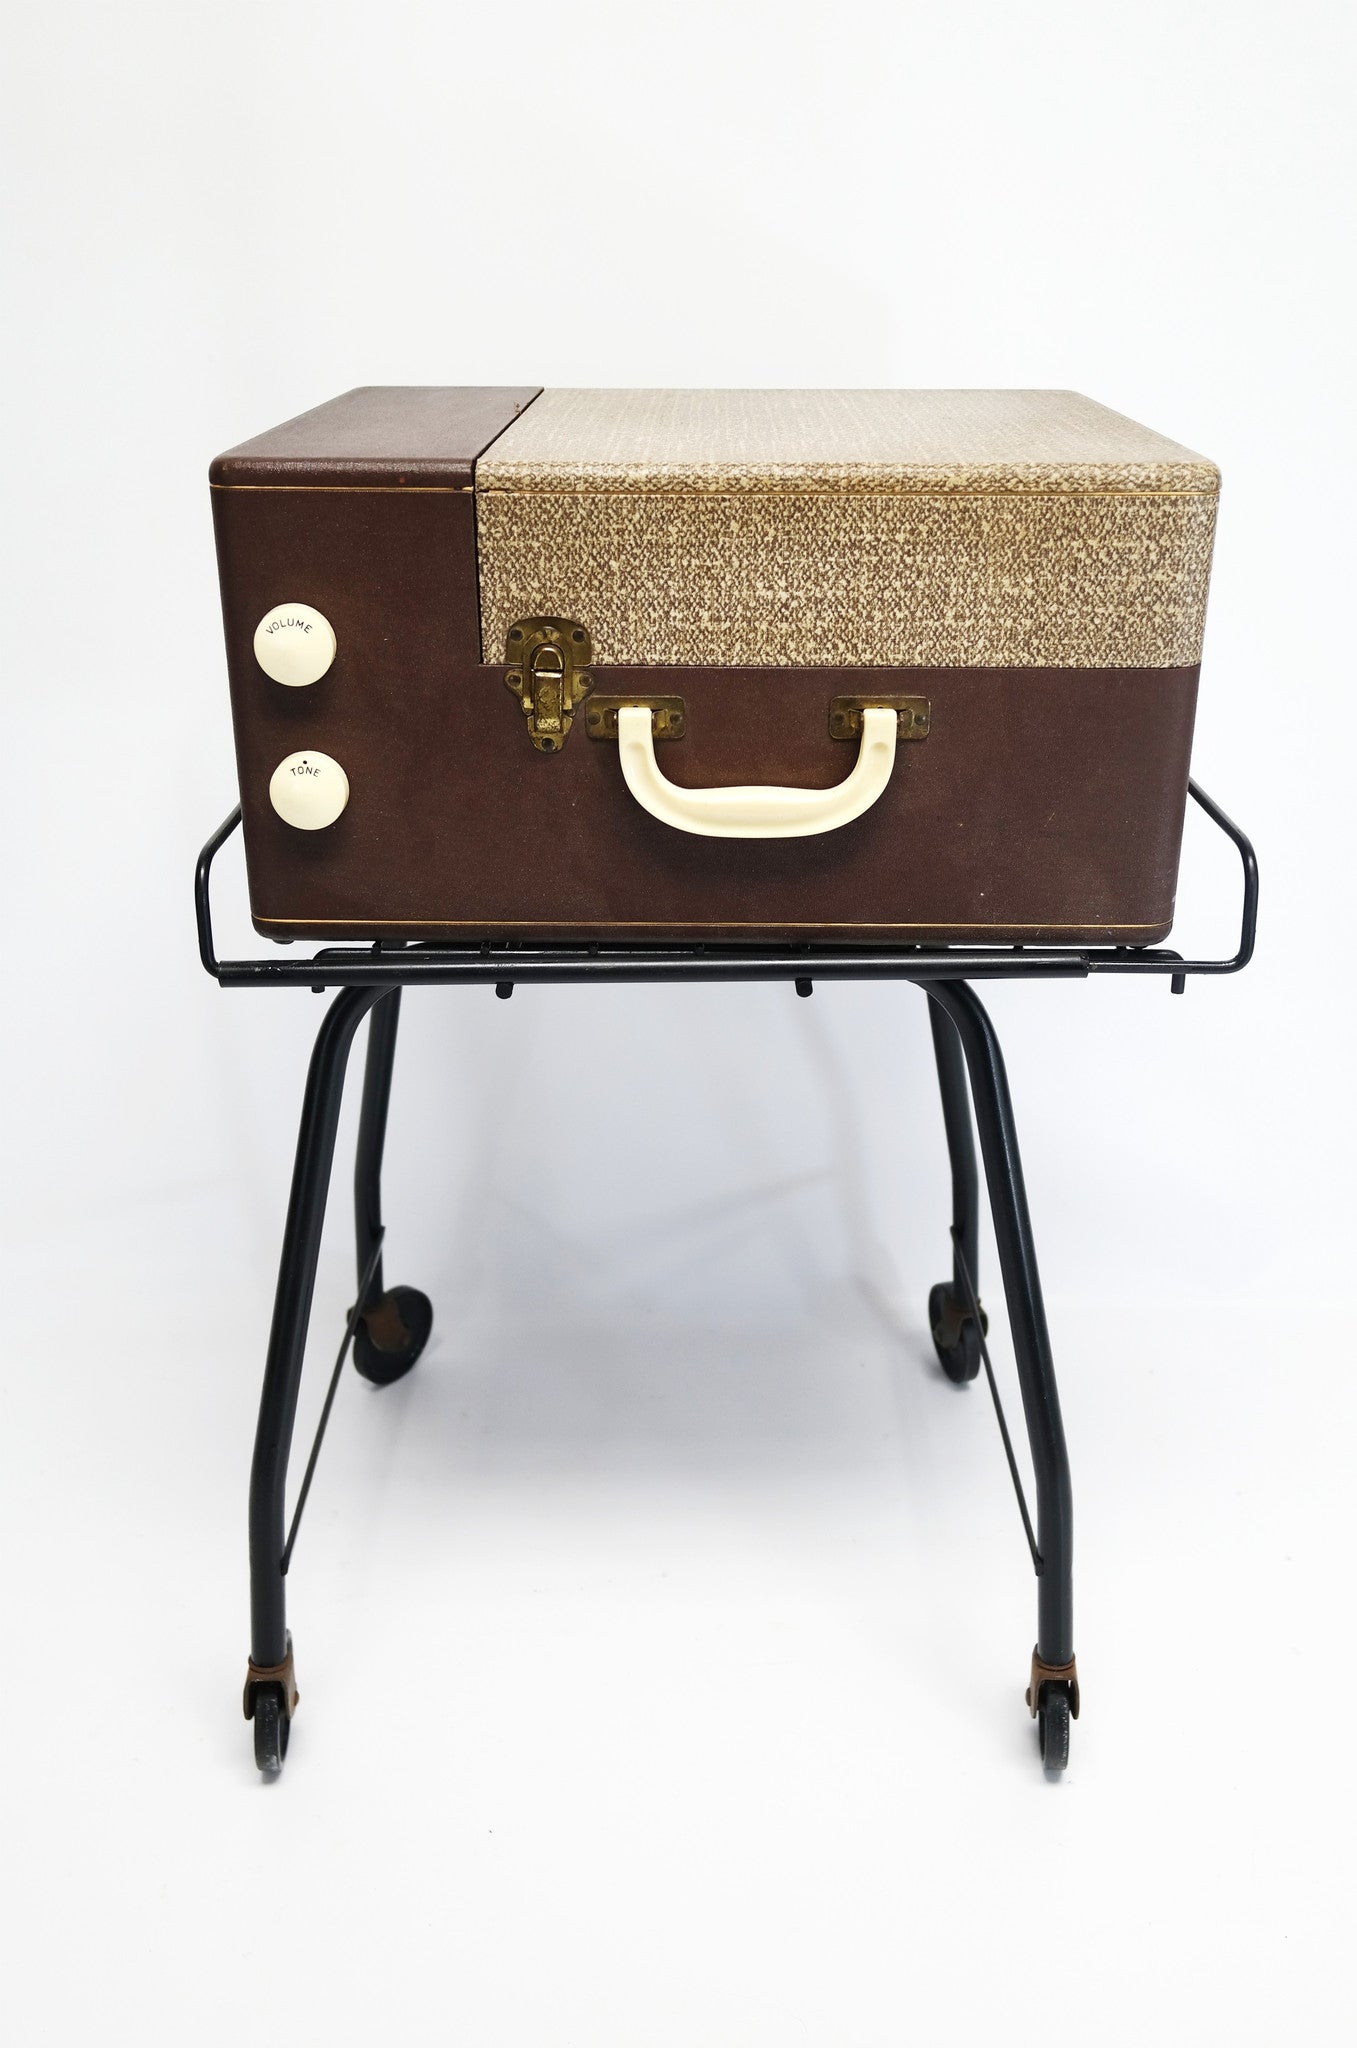 Sold at Auction: A Vintage Suitcase